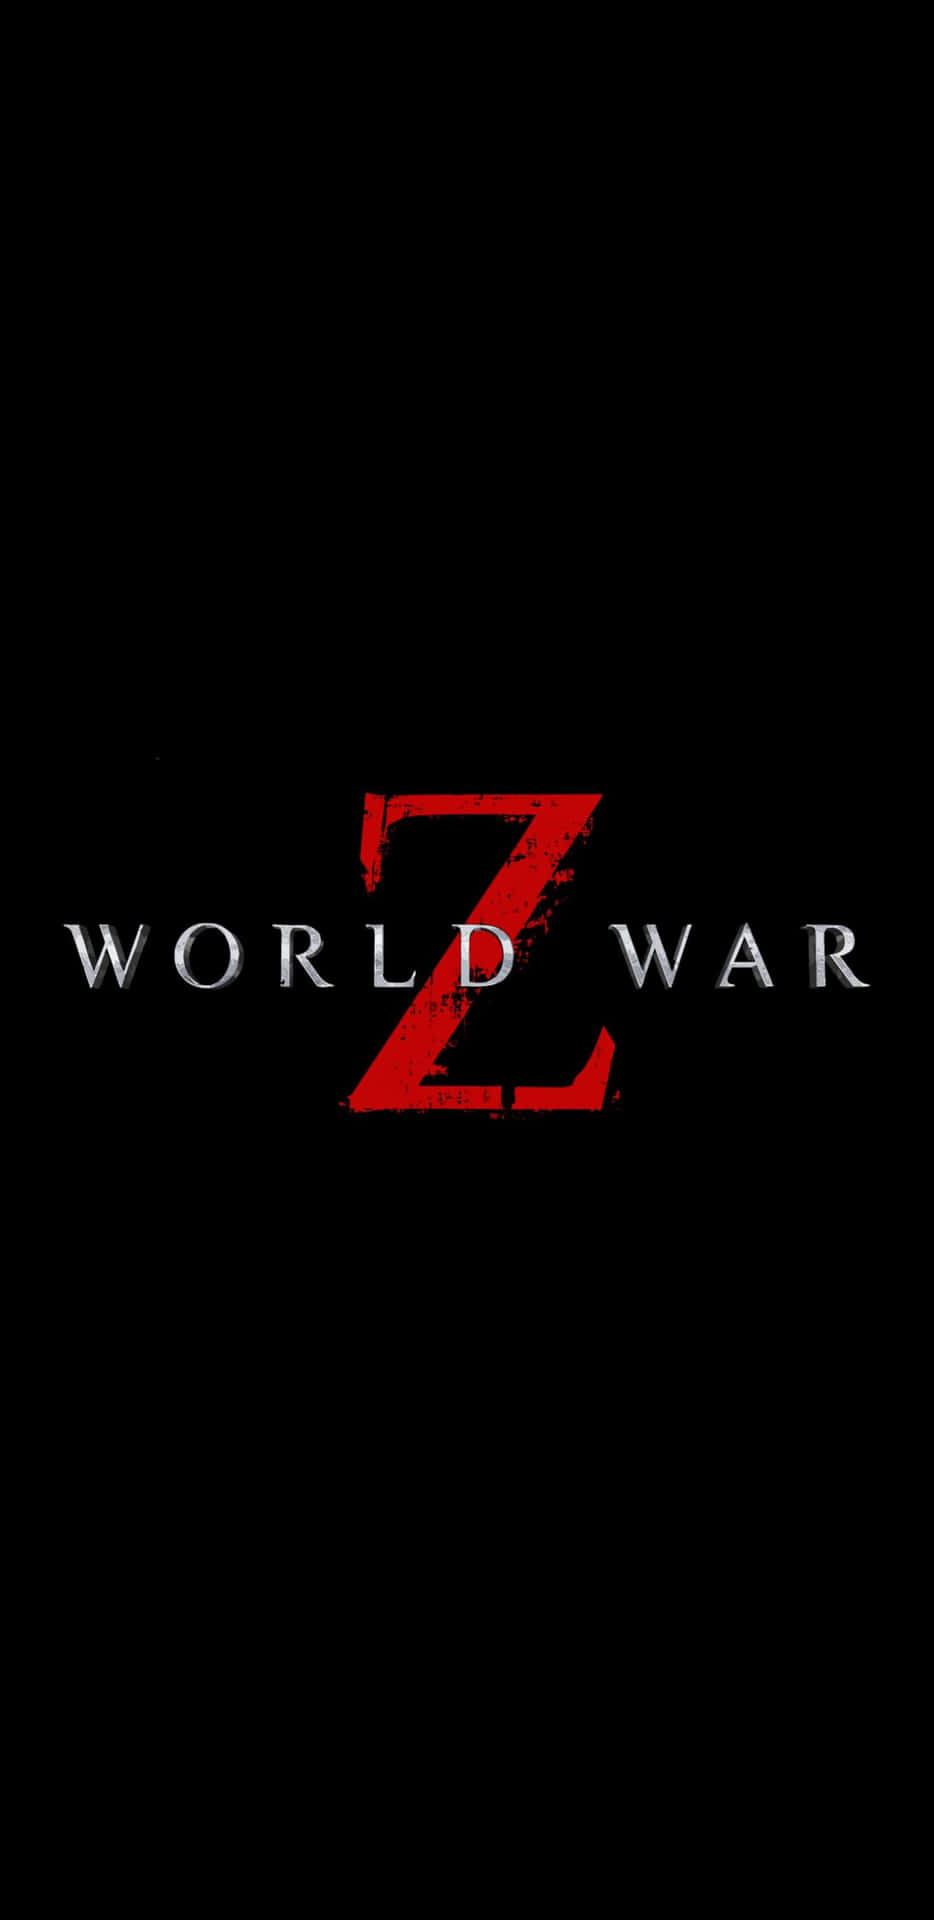 World War Z Logo On A Black Background